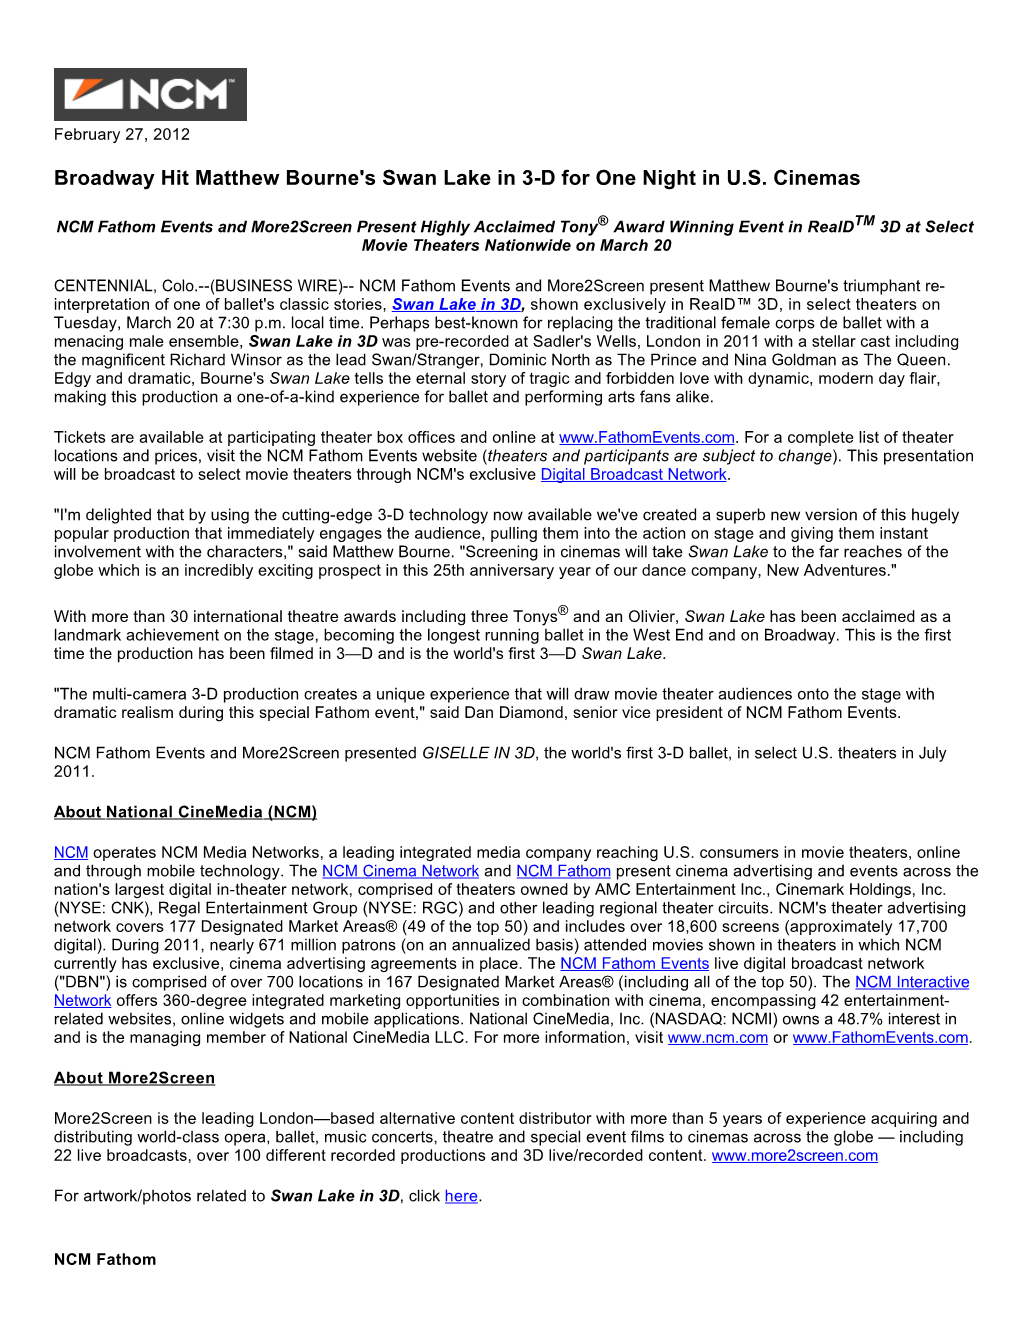 Broadway Hit Matthew Bourne's Swan Lake in 3-D for One Night in U.S. Cinemas